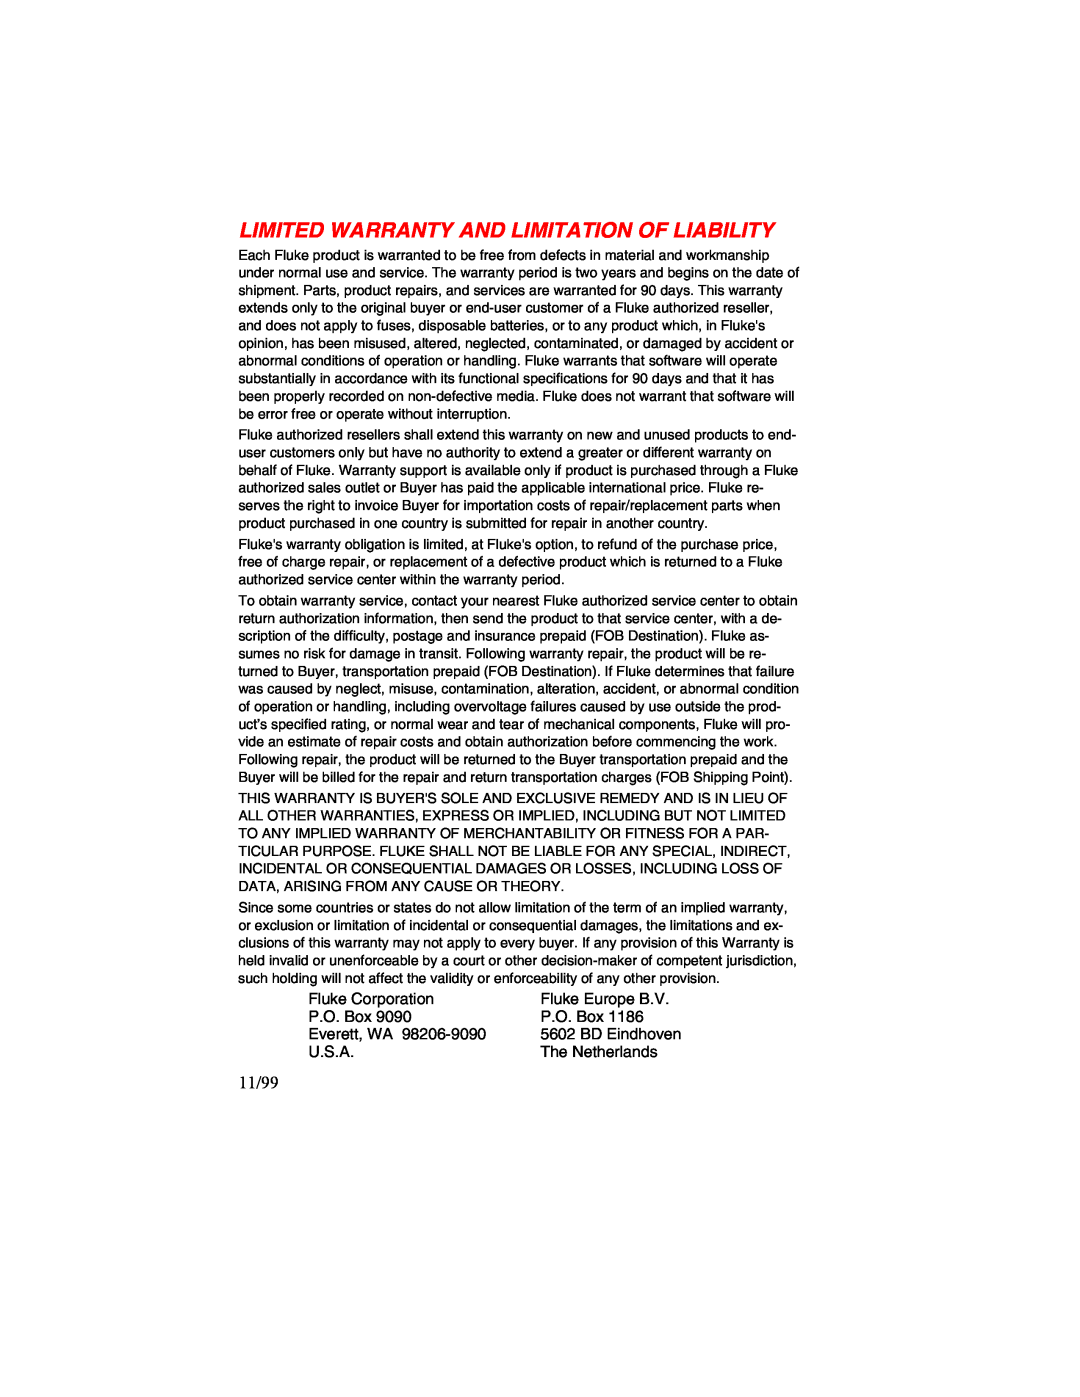 Fluke 1625 user manual Limited Warranty And Limitation Of Liability, 11/99 